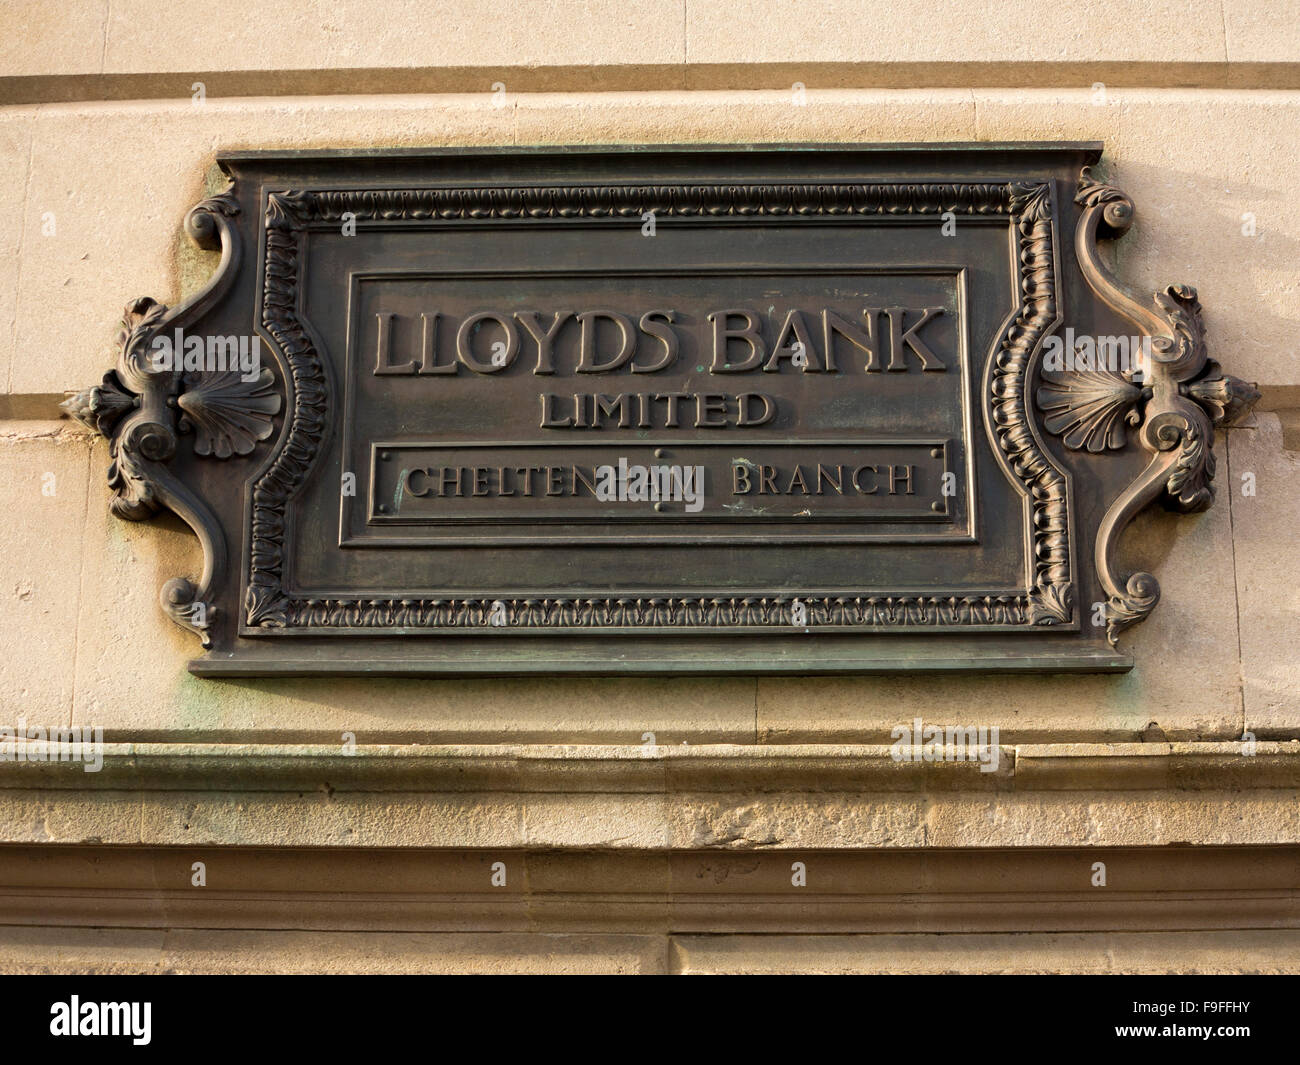 UK, England, Gloucestershire, Cheltenham, Rodney Road, Lloyds Bank, Cheltenham Branch bronze name plate Stock Photo